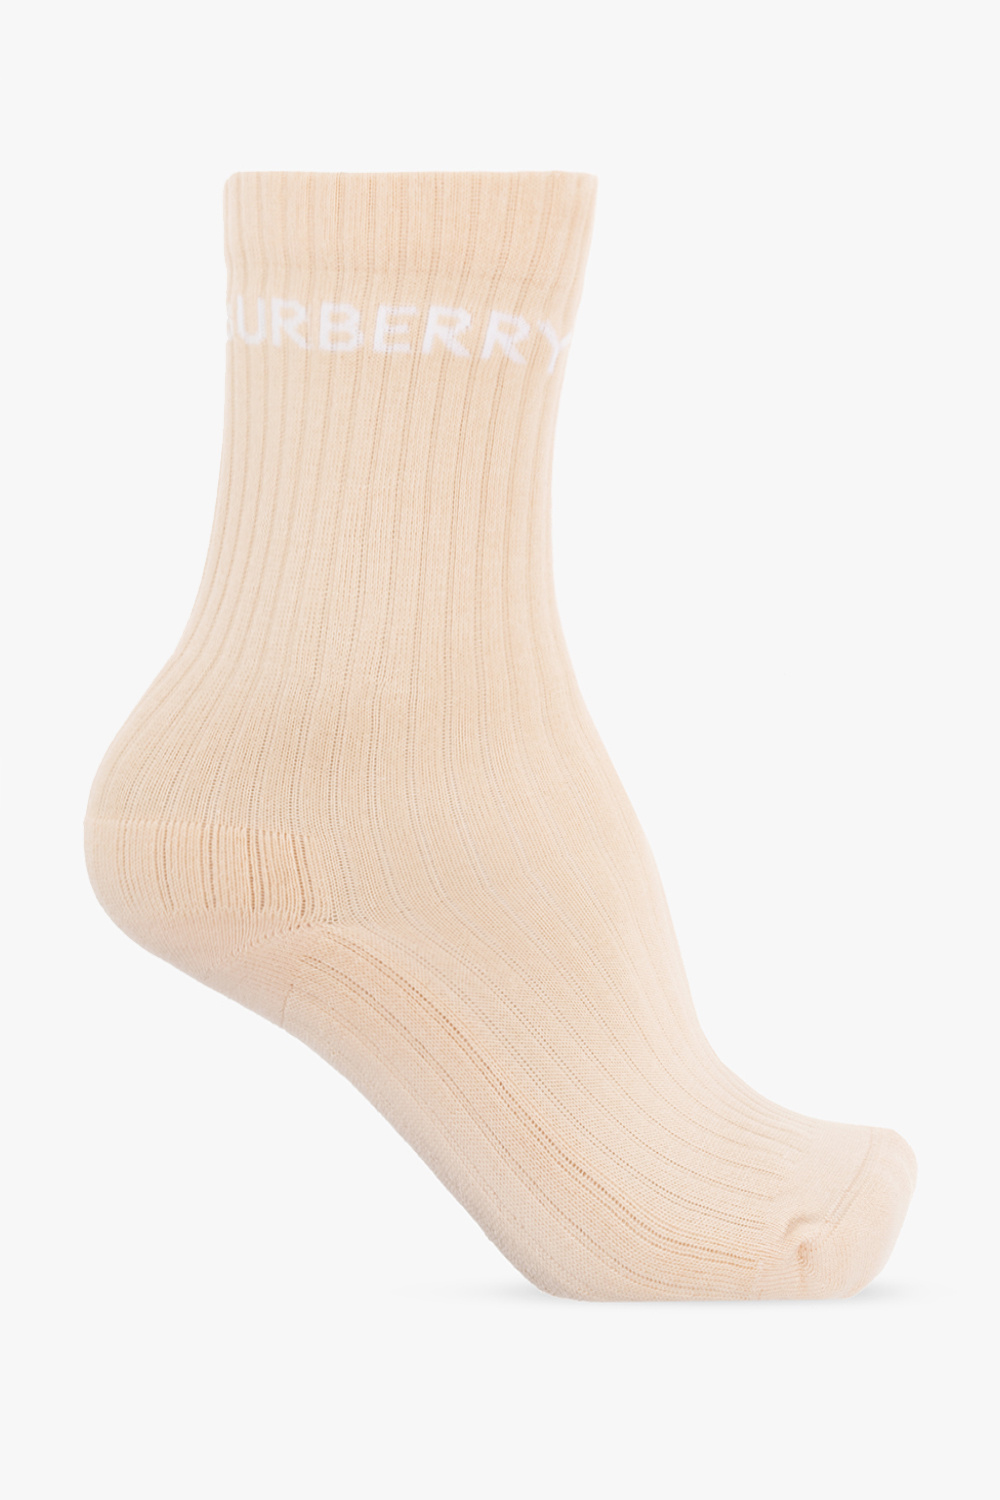 burberry Taschen Cotton socks